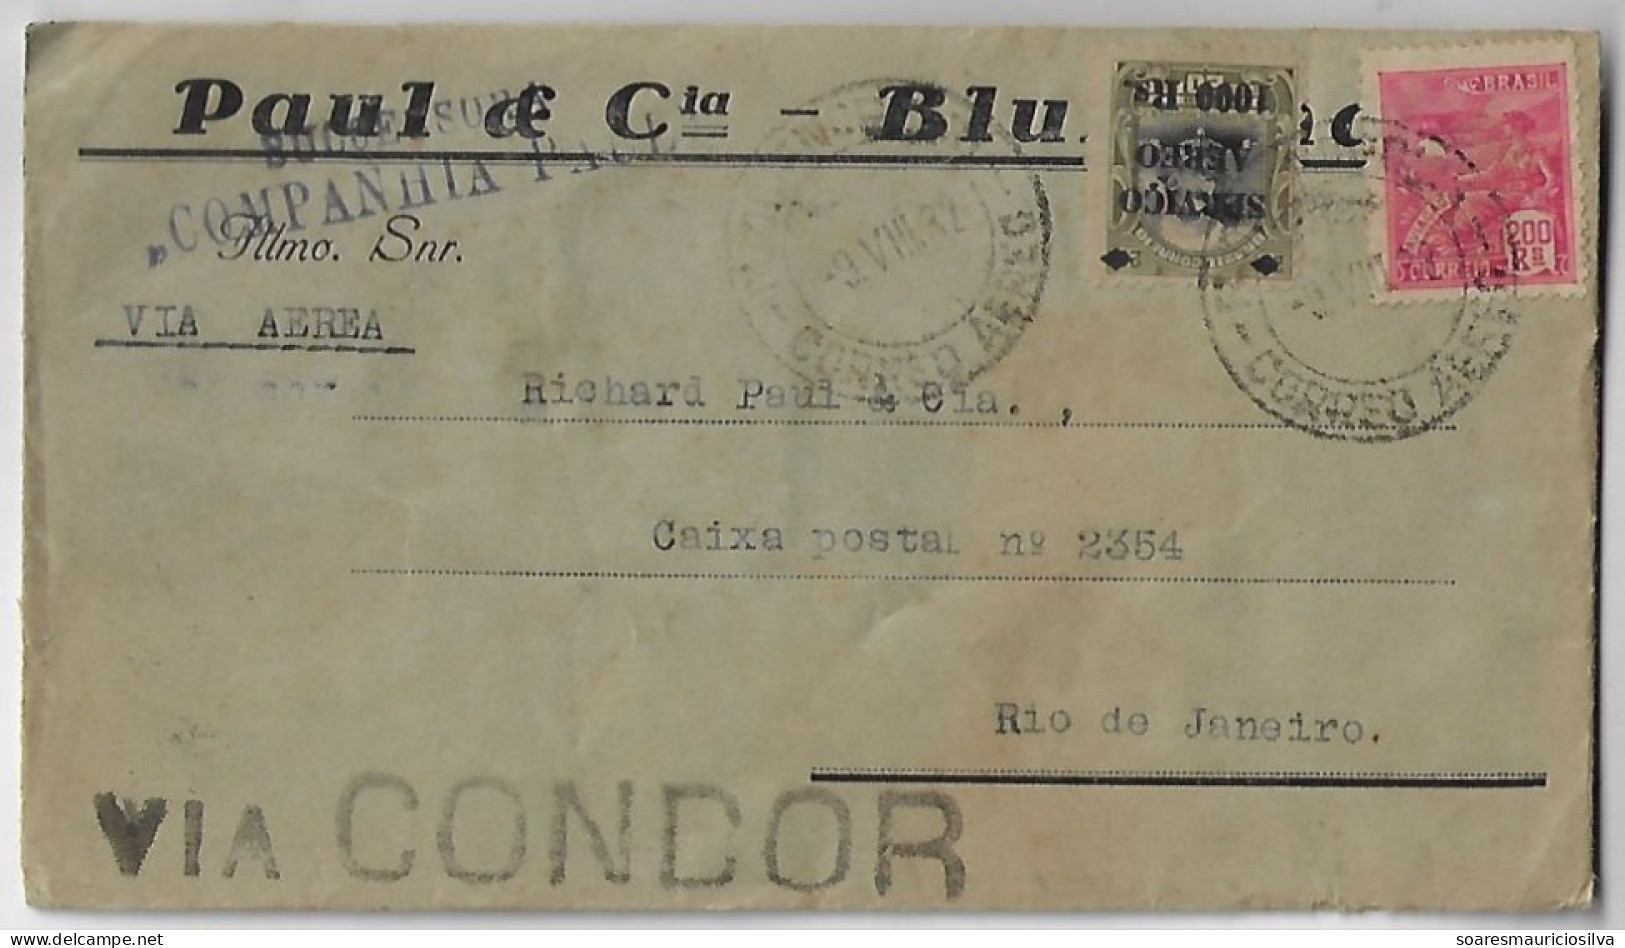 Brazil 1932 Company Paul Blumenau Cover From Florianópolis To Rio De Janeiro Condor Syndicate Airmail + Definitive Stamp - Airmail (Private Companies)